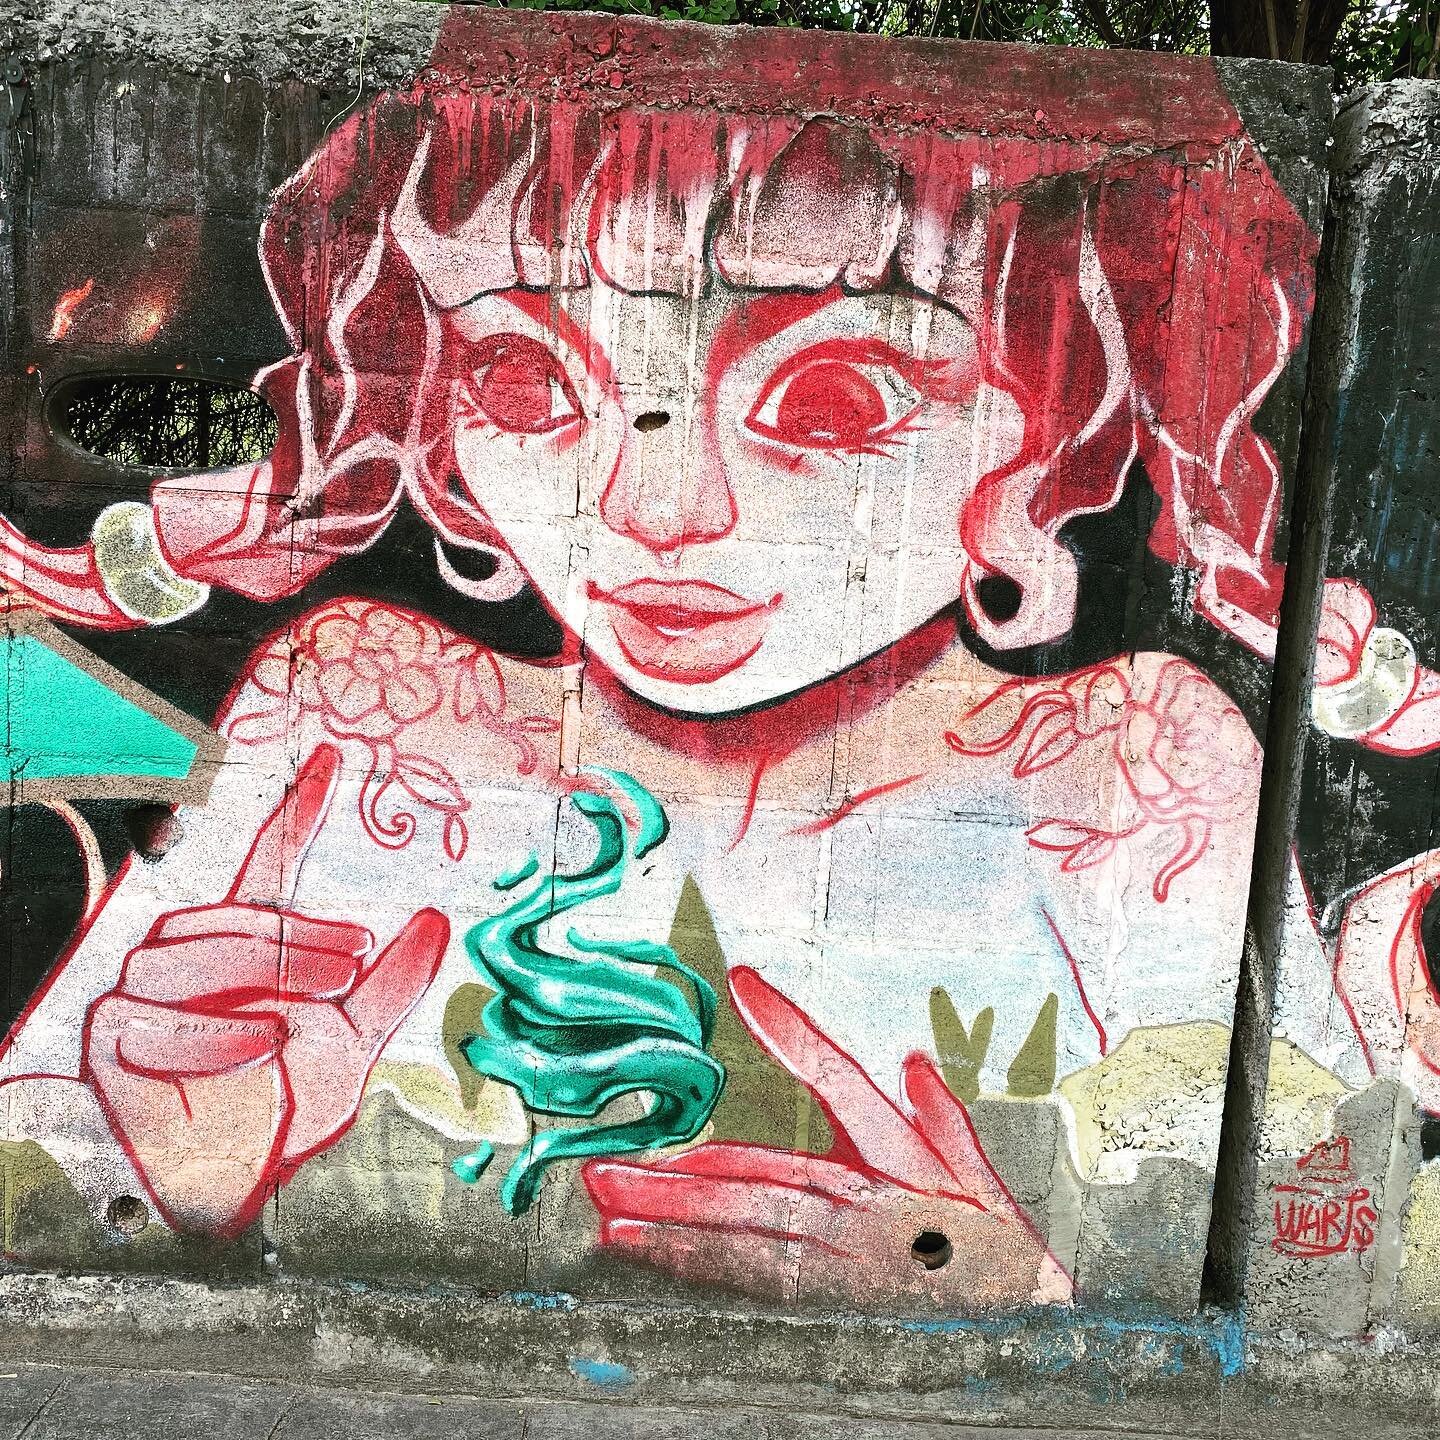 Bangna Bangkok street art.
#bangkok #thailand #graffiti